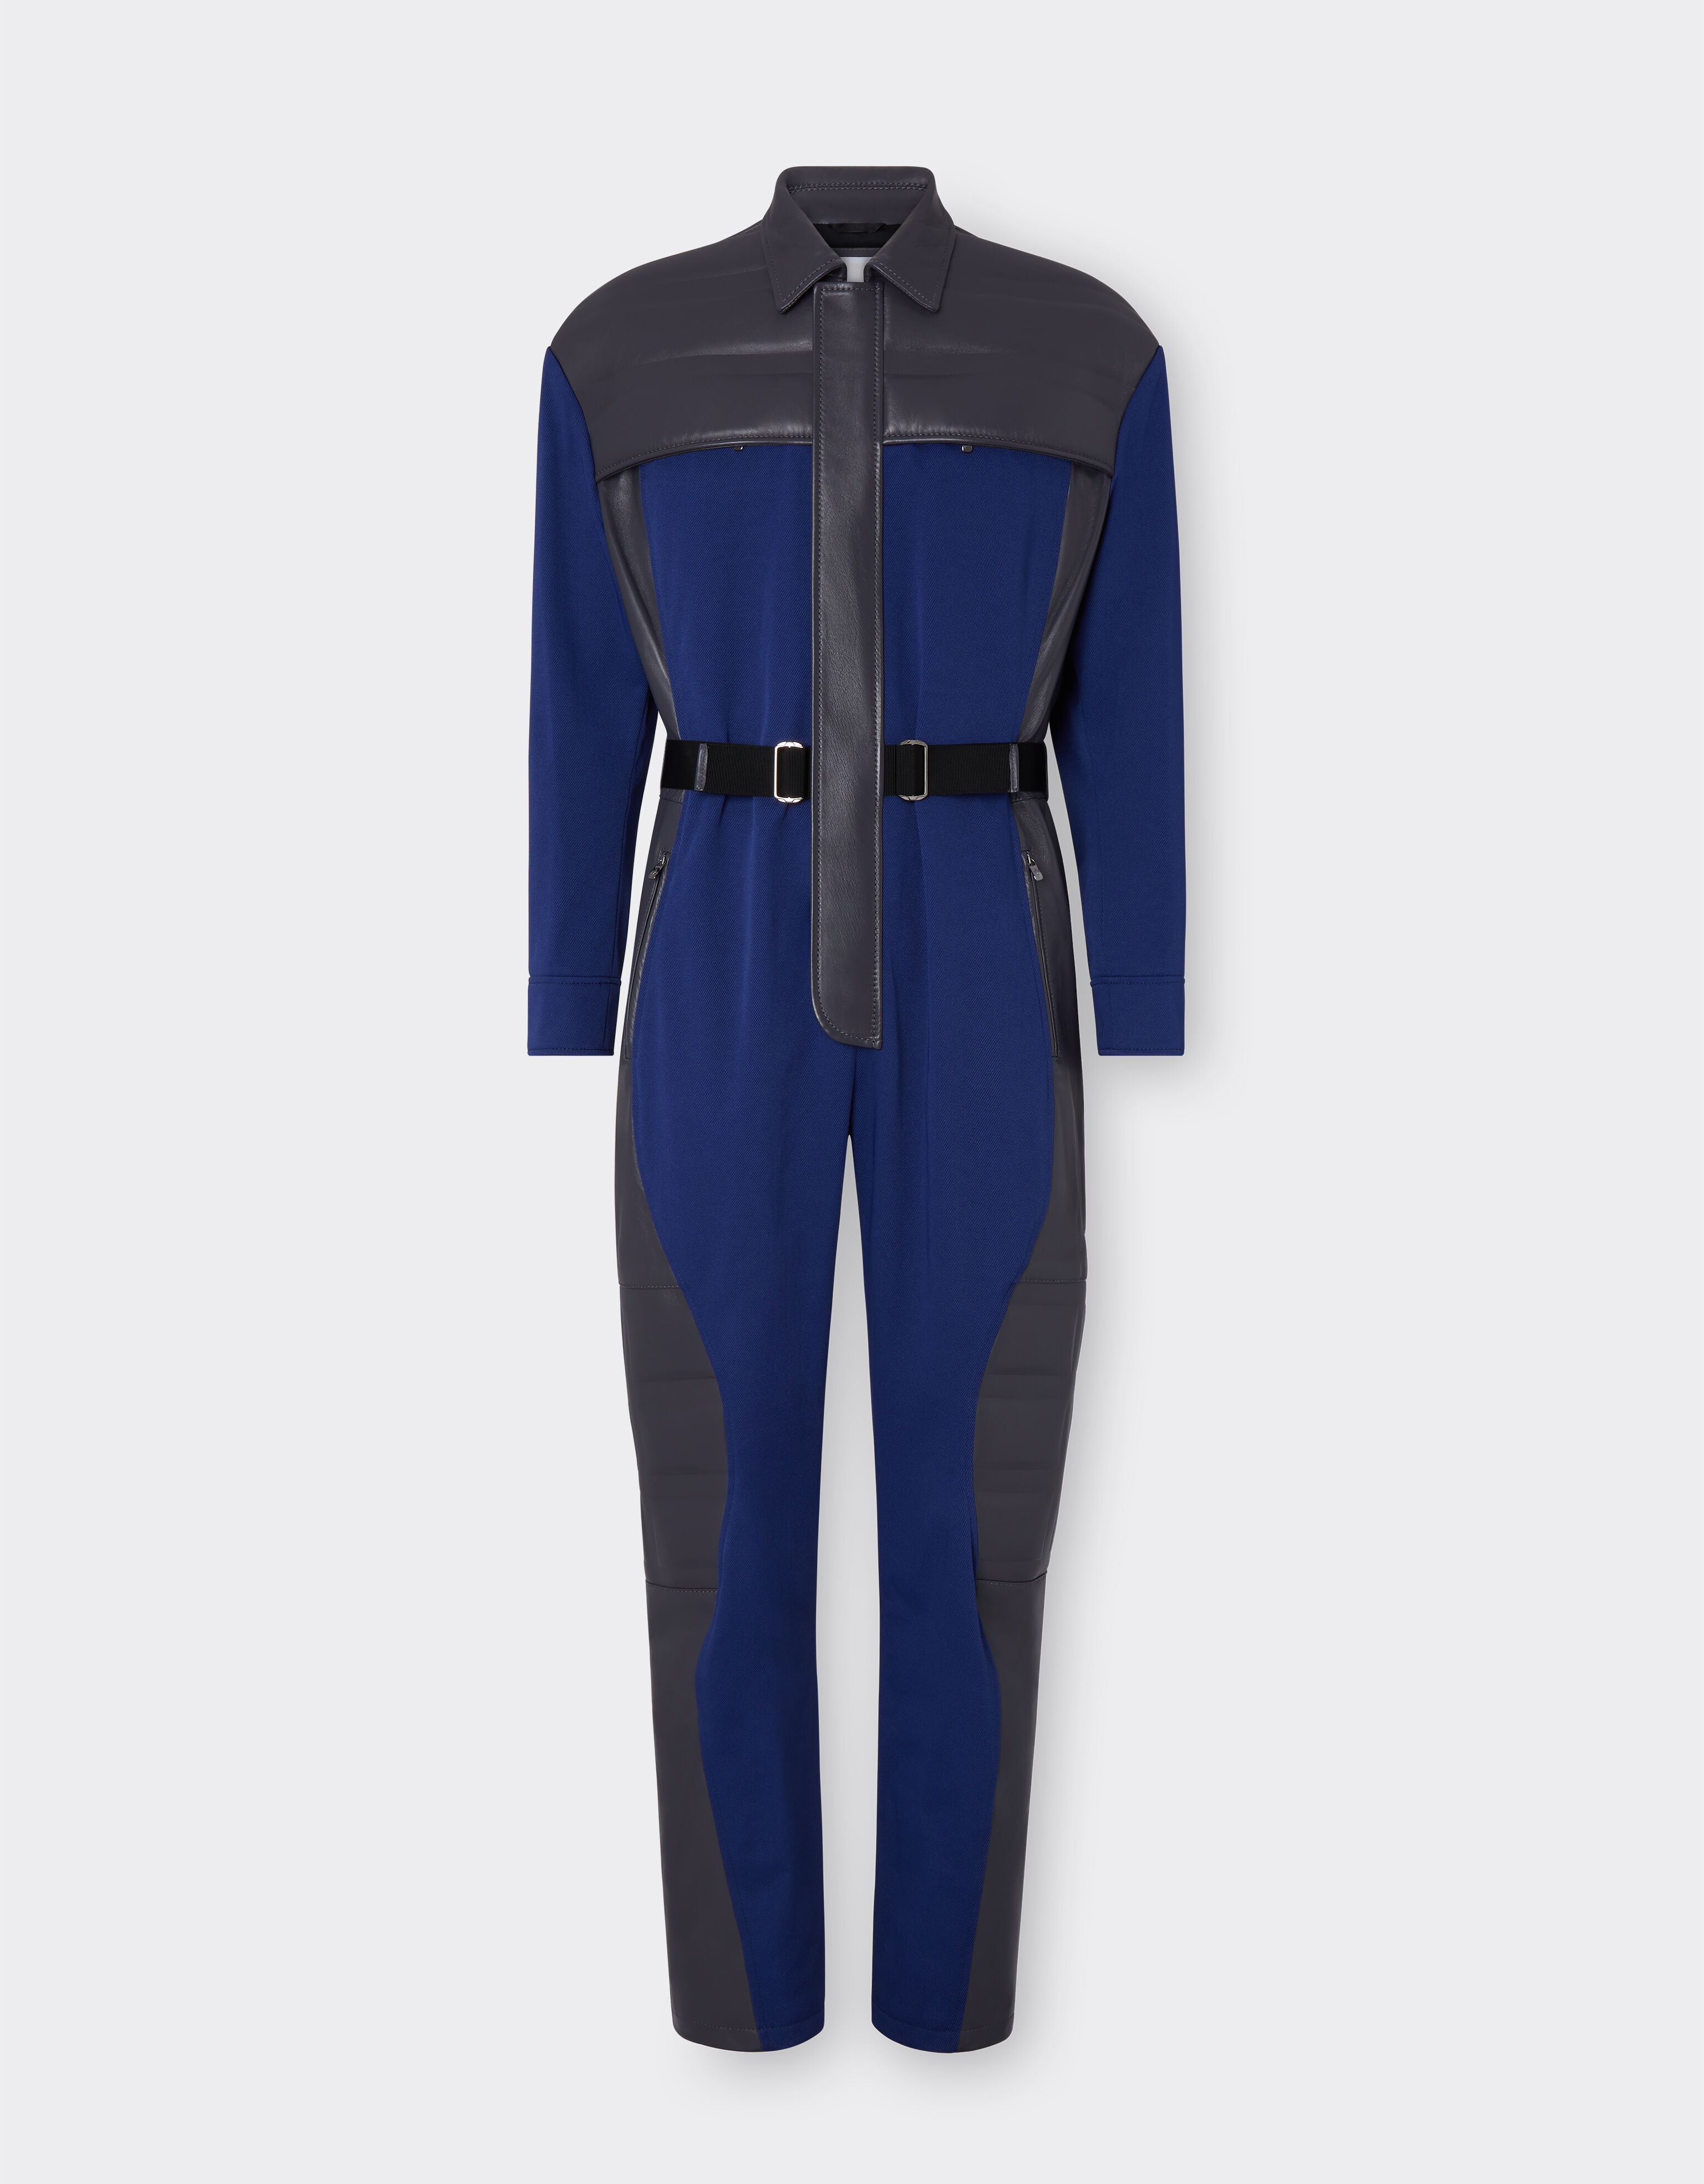 Ferrari Ferrari suit in nylon and leather Blu Scozia 47525f